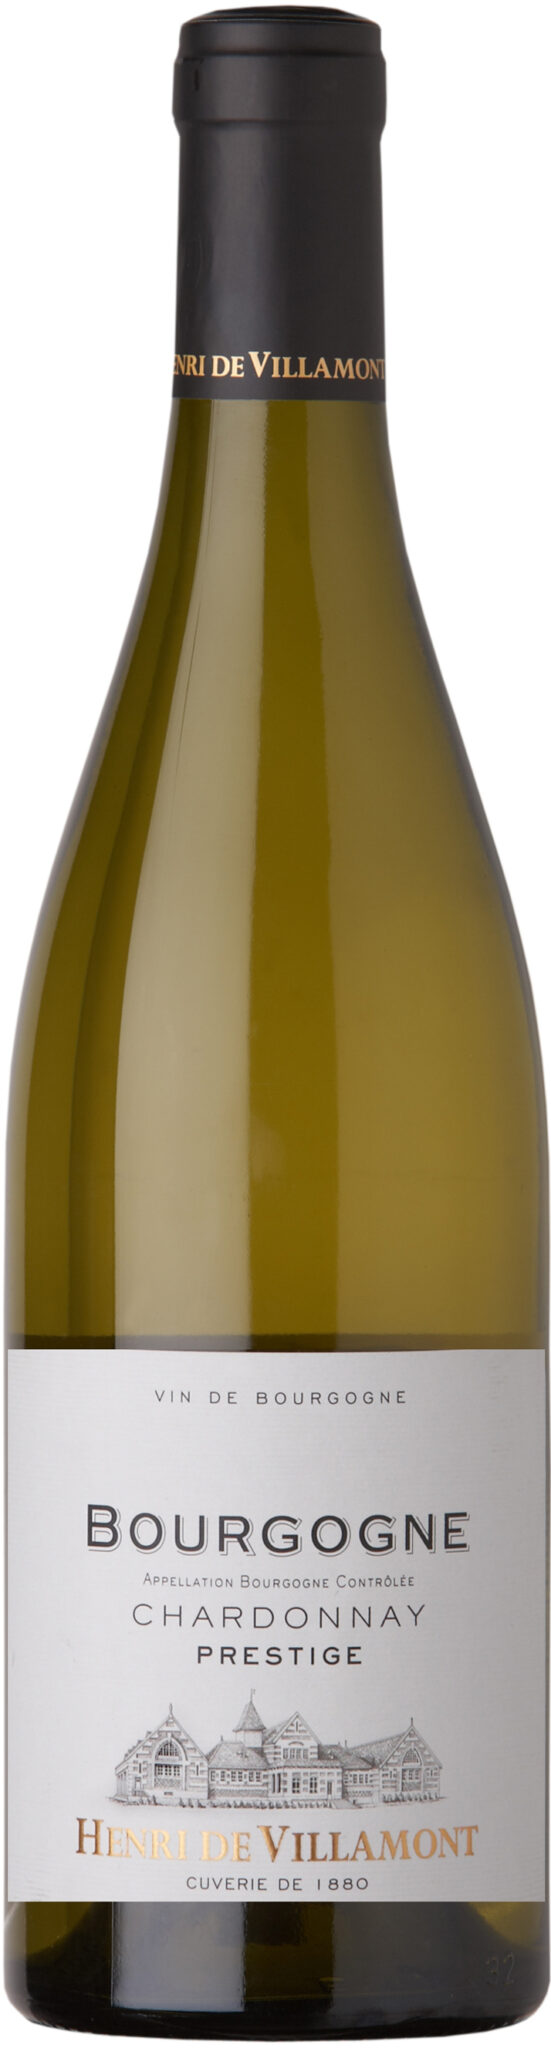 Henri de Villamont Prestige, Chardonnay Bourgogne AOC